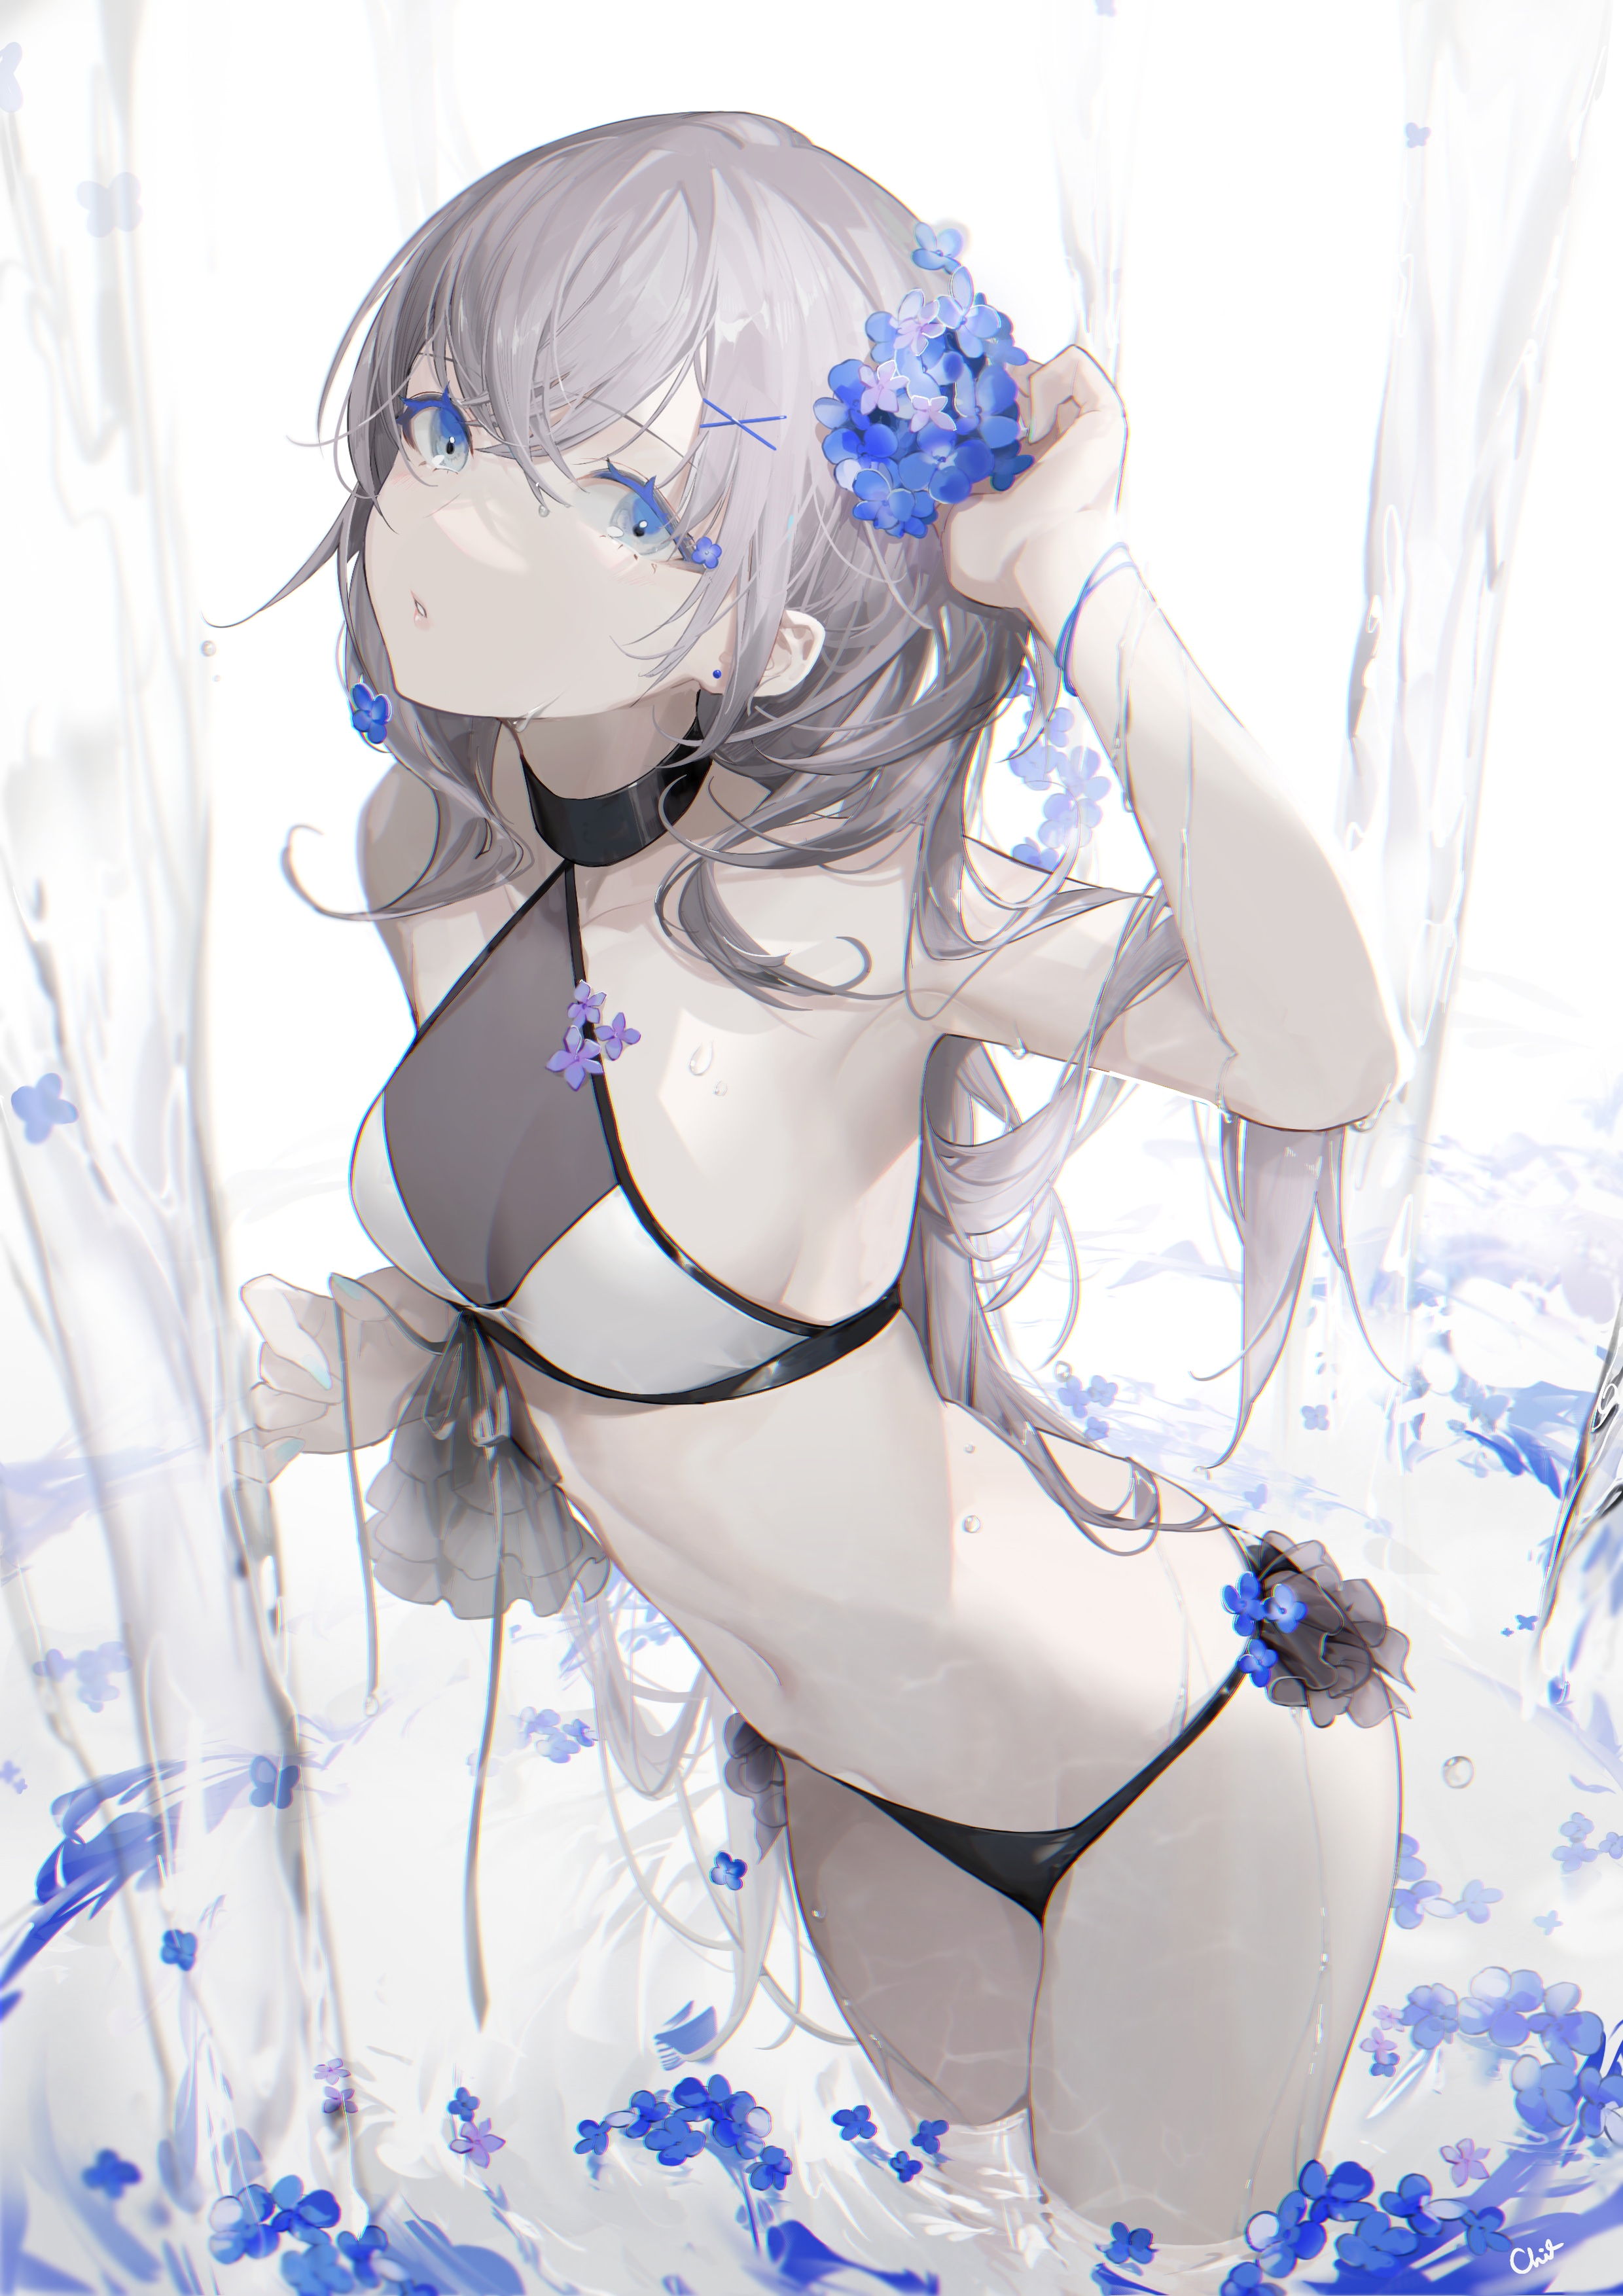 Anime 2480x3508 anime anime girls digital art artwork 2D portrait display chi4 gray hair long hair blue eyes flowers bikini belly